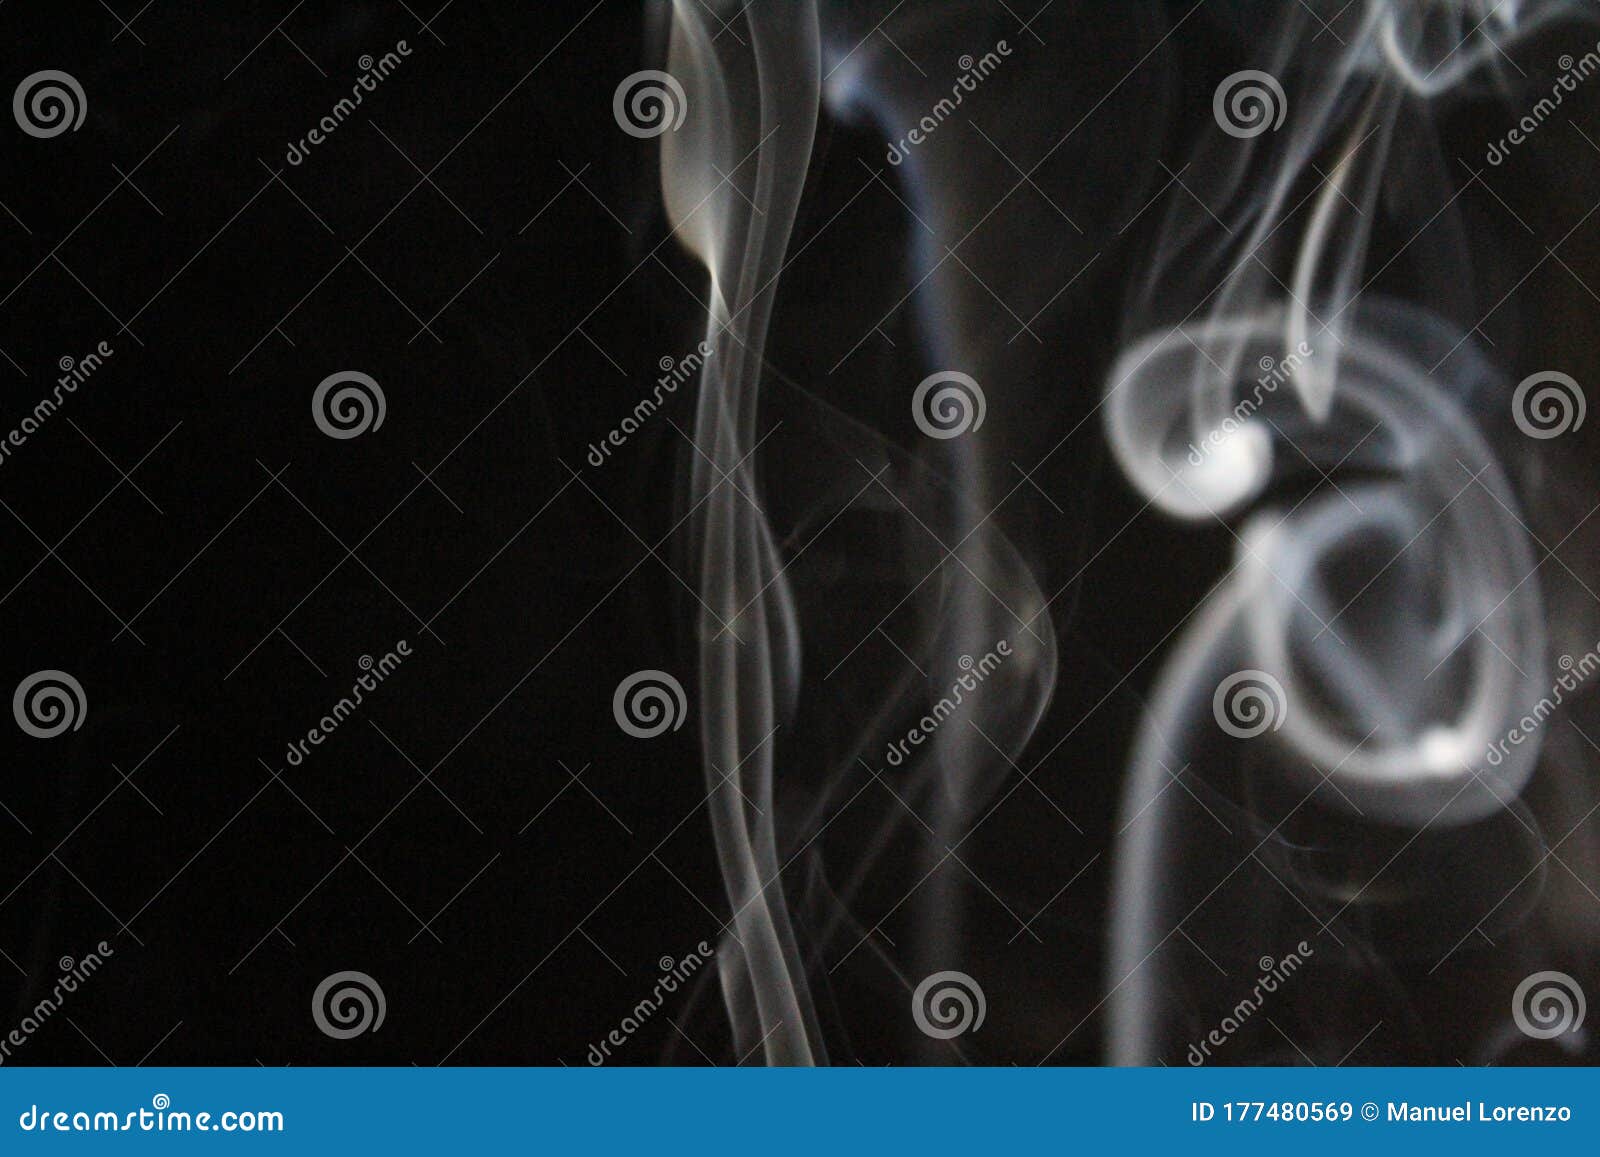 aroma incense smoke ethereal odor slight figure